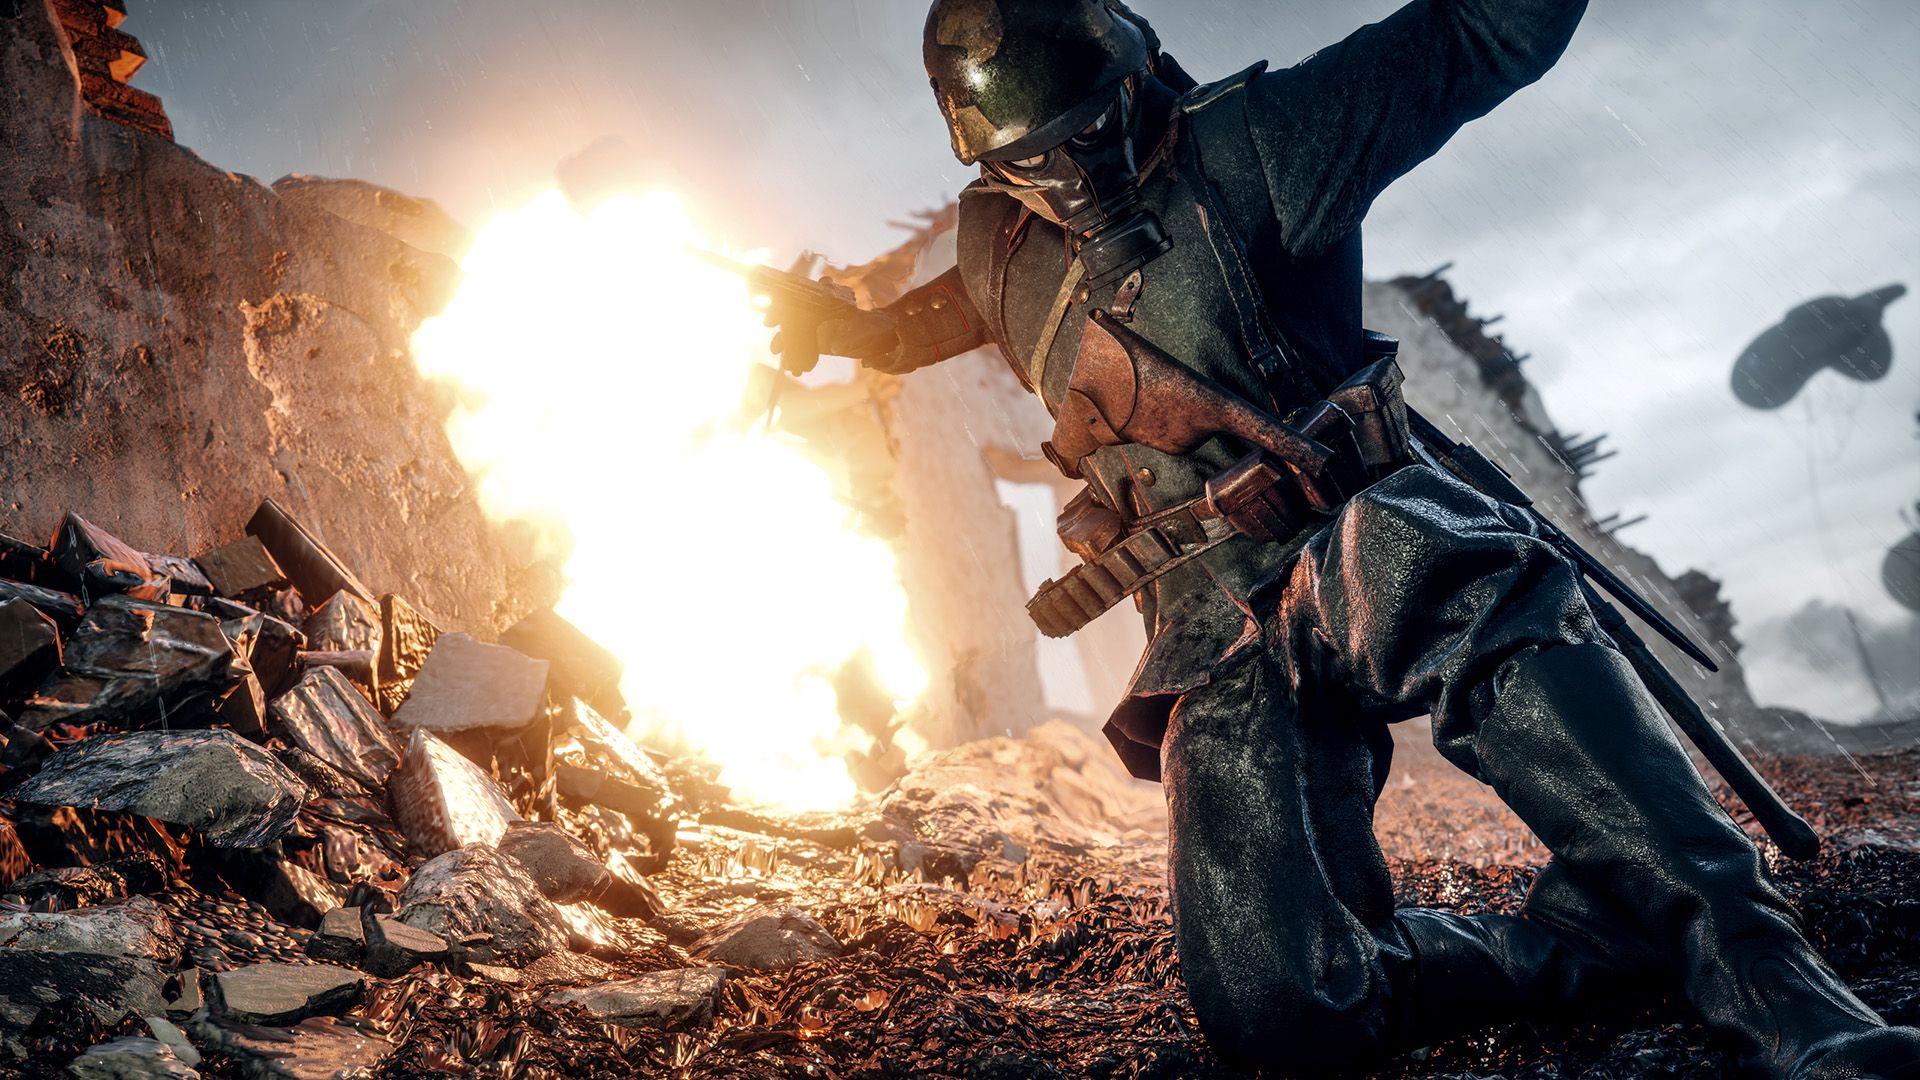 Video Game Battlefield HD Games, 4k Wallpaper, Image